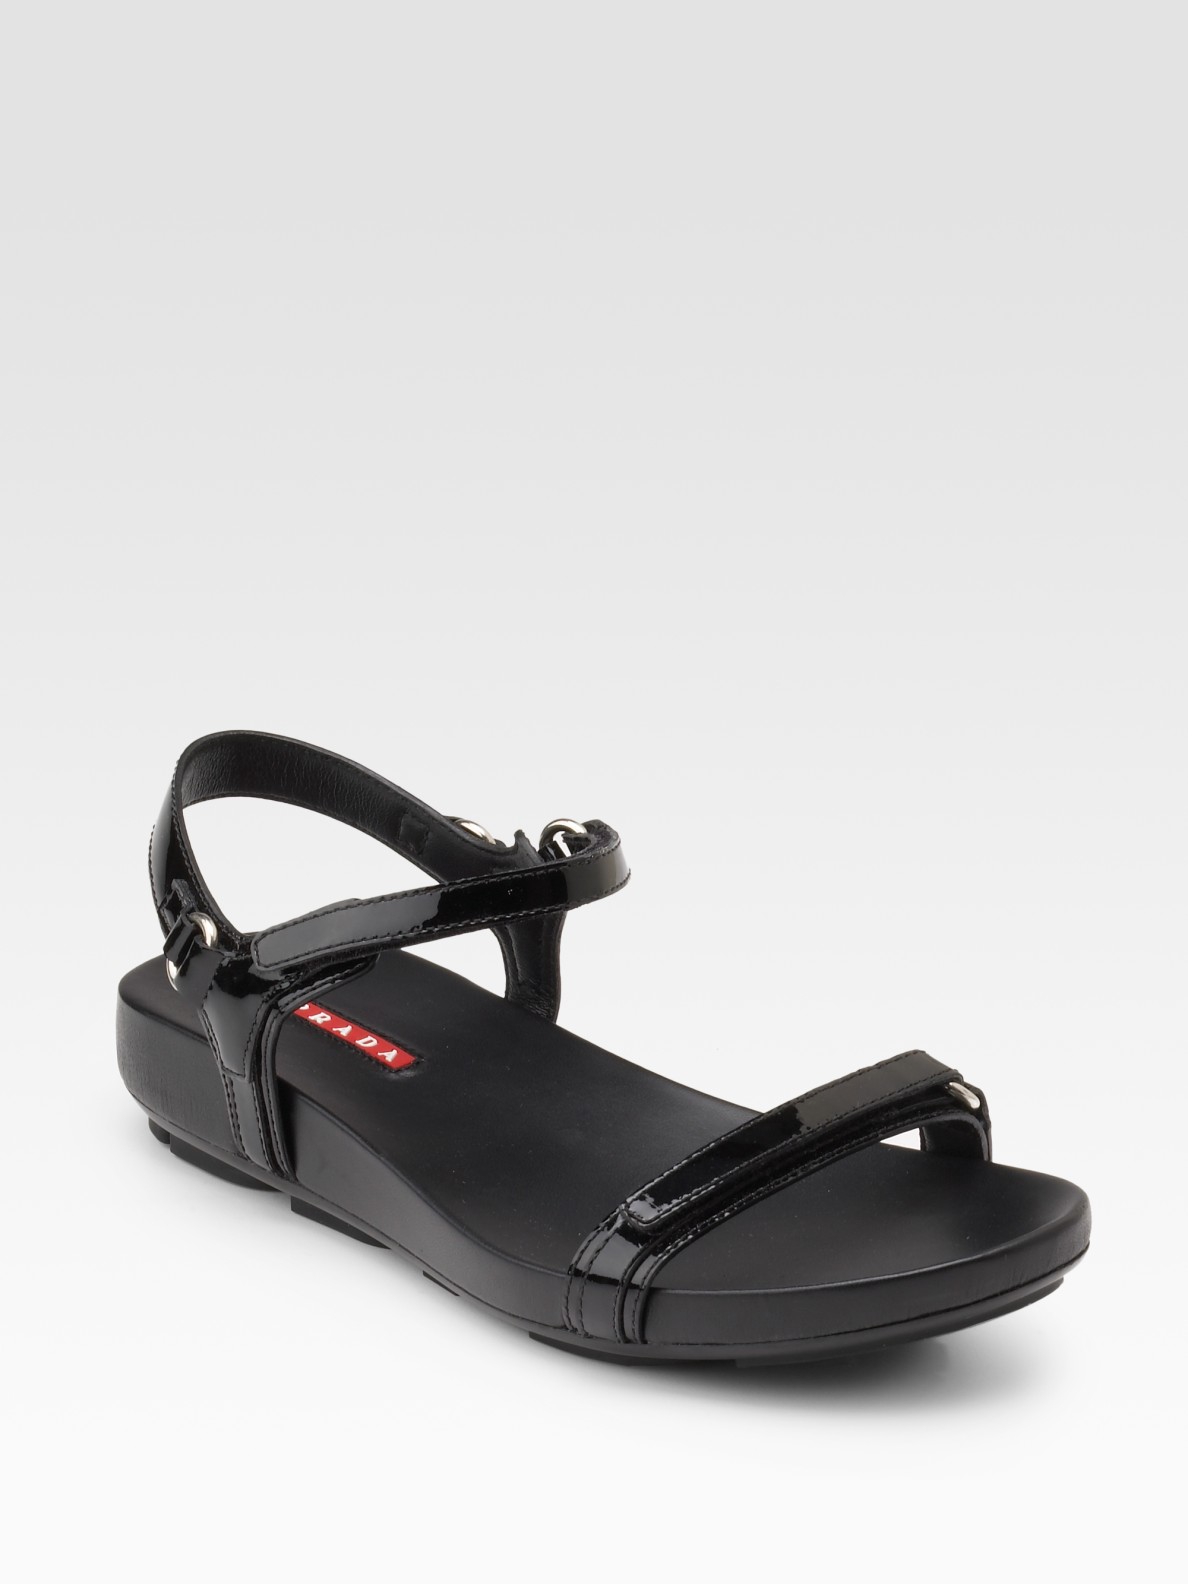 Lyst - Prada Patent Leather Flat Sandals in Black